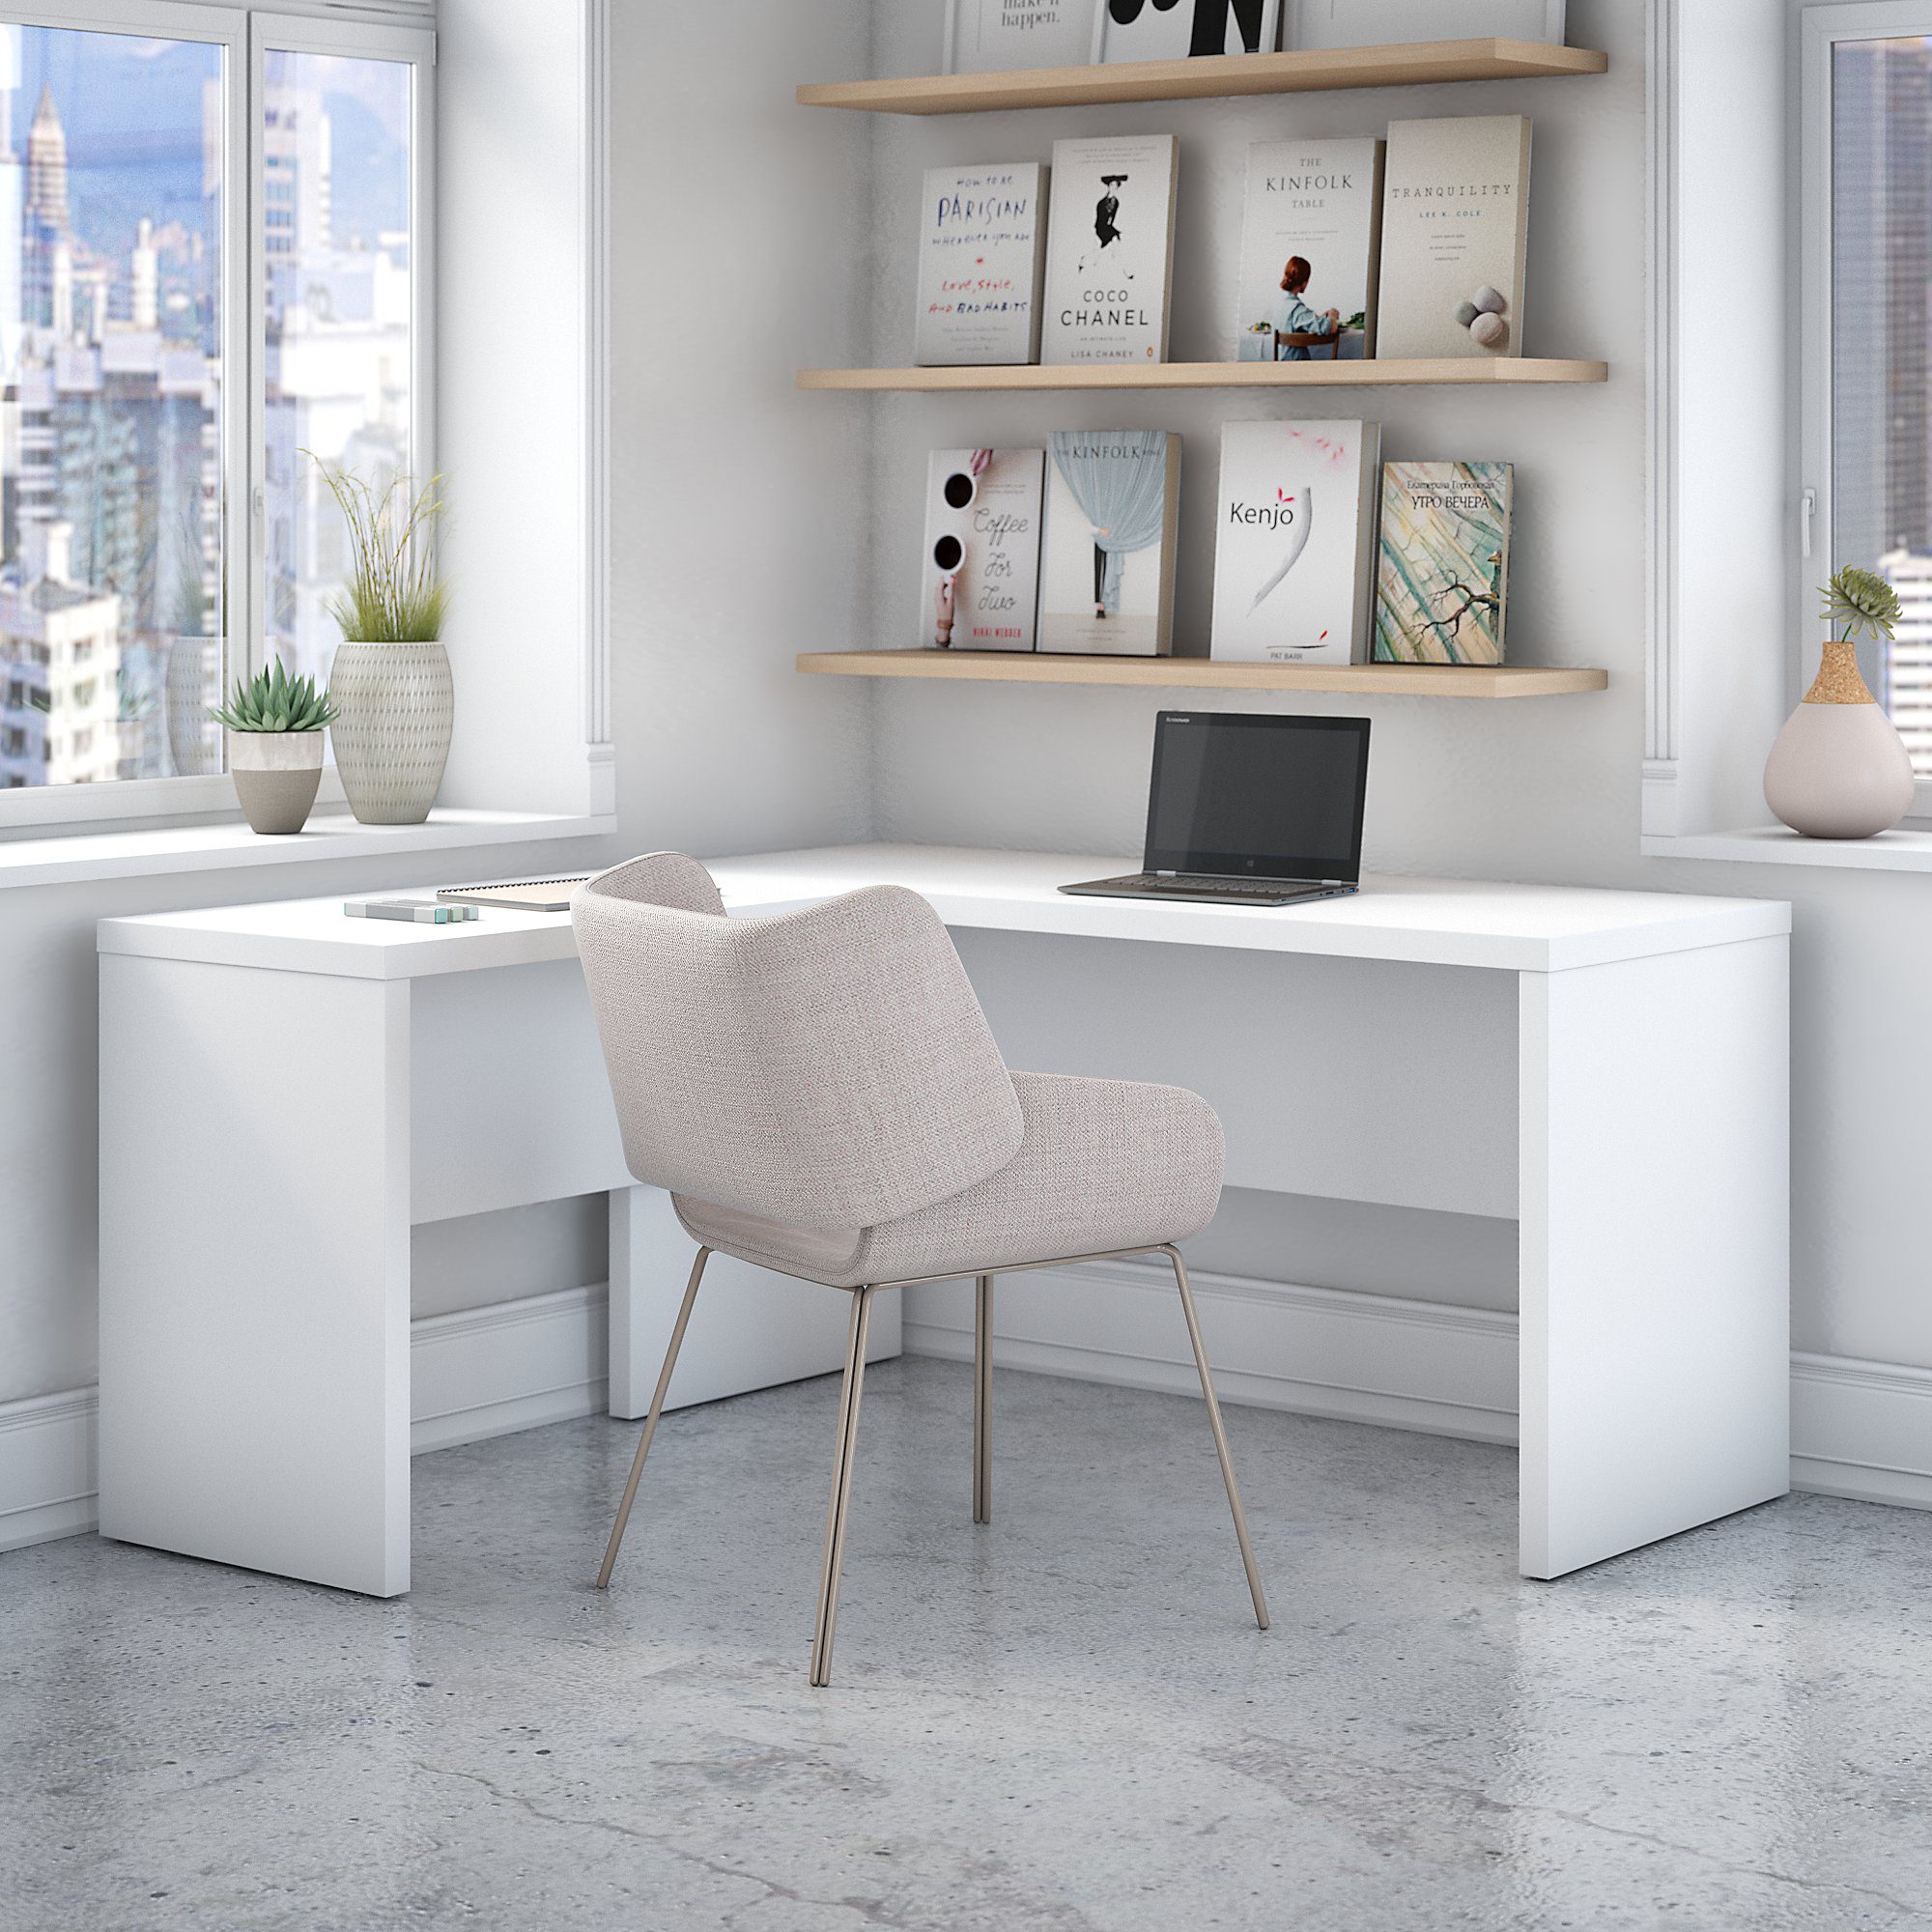 Bush Business Furniture 400 Series 60 x 30 Table Desk in White